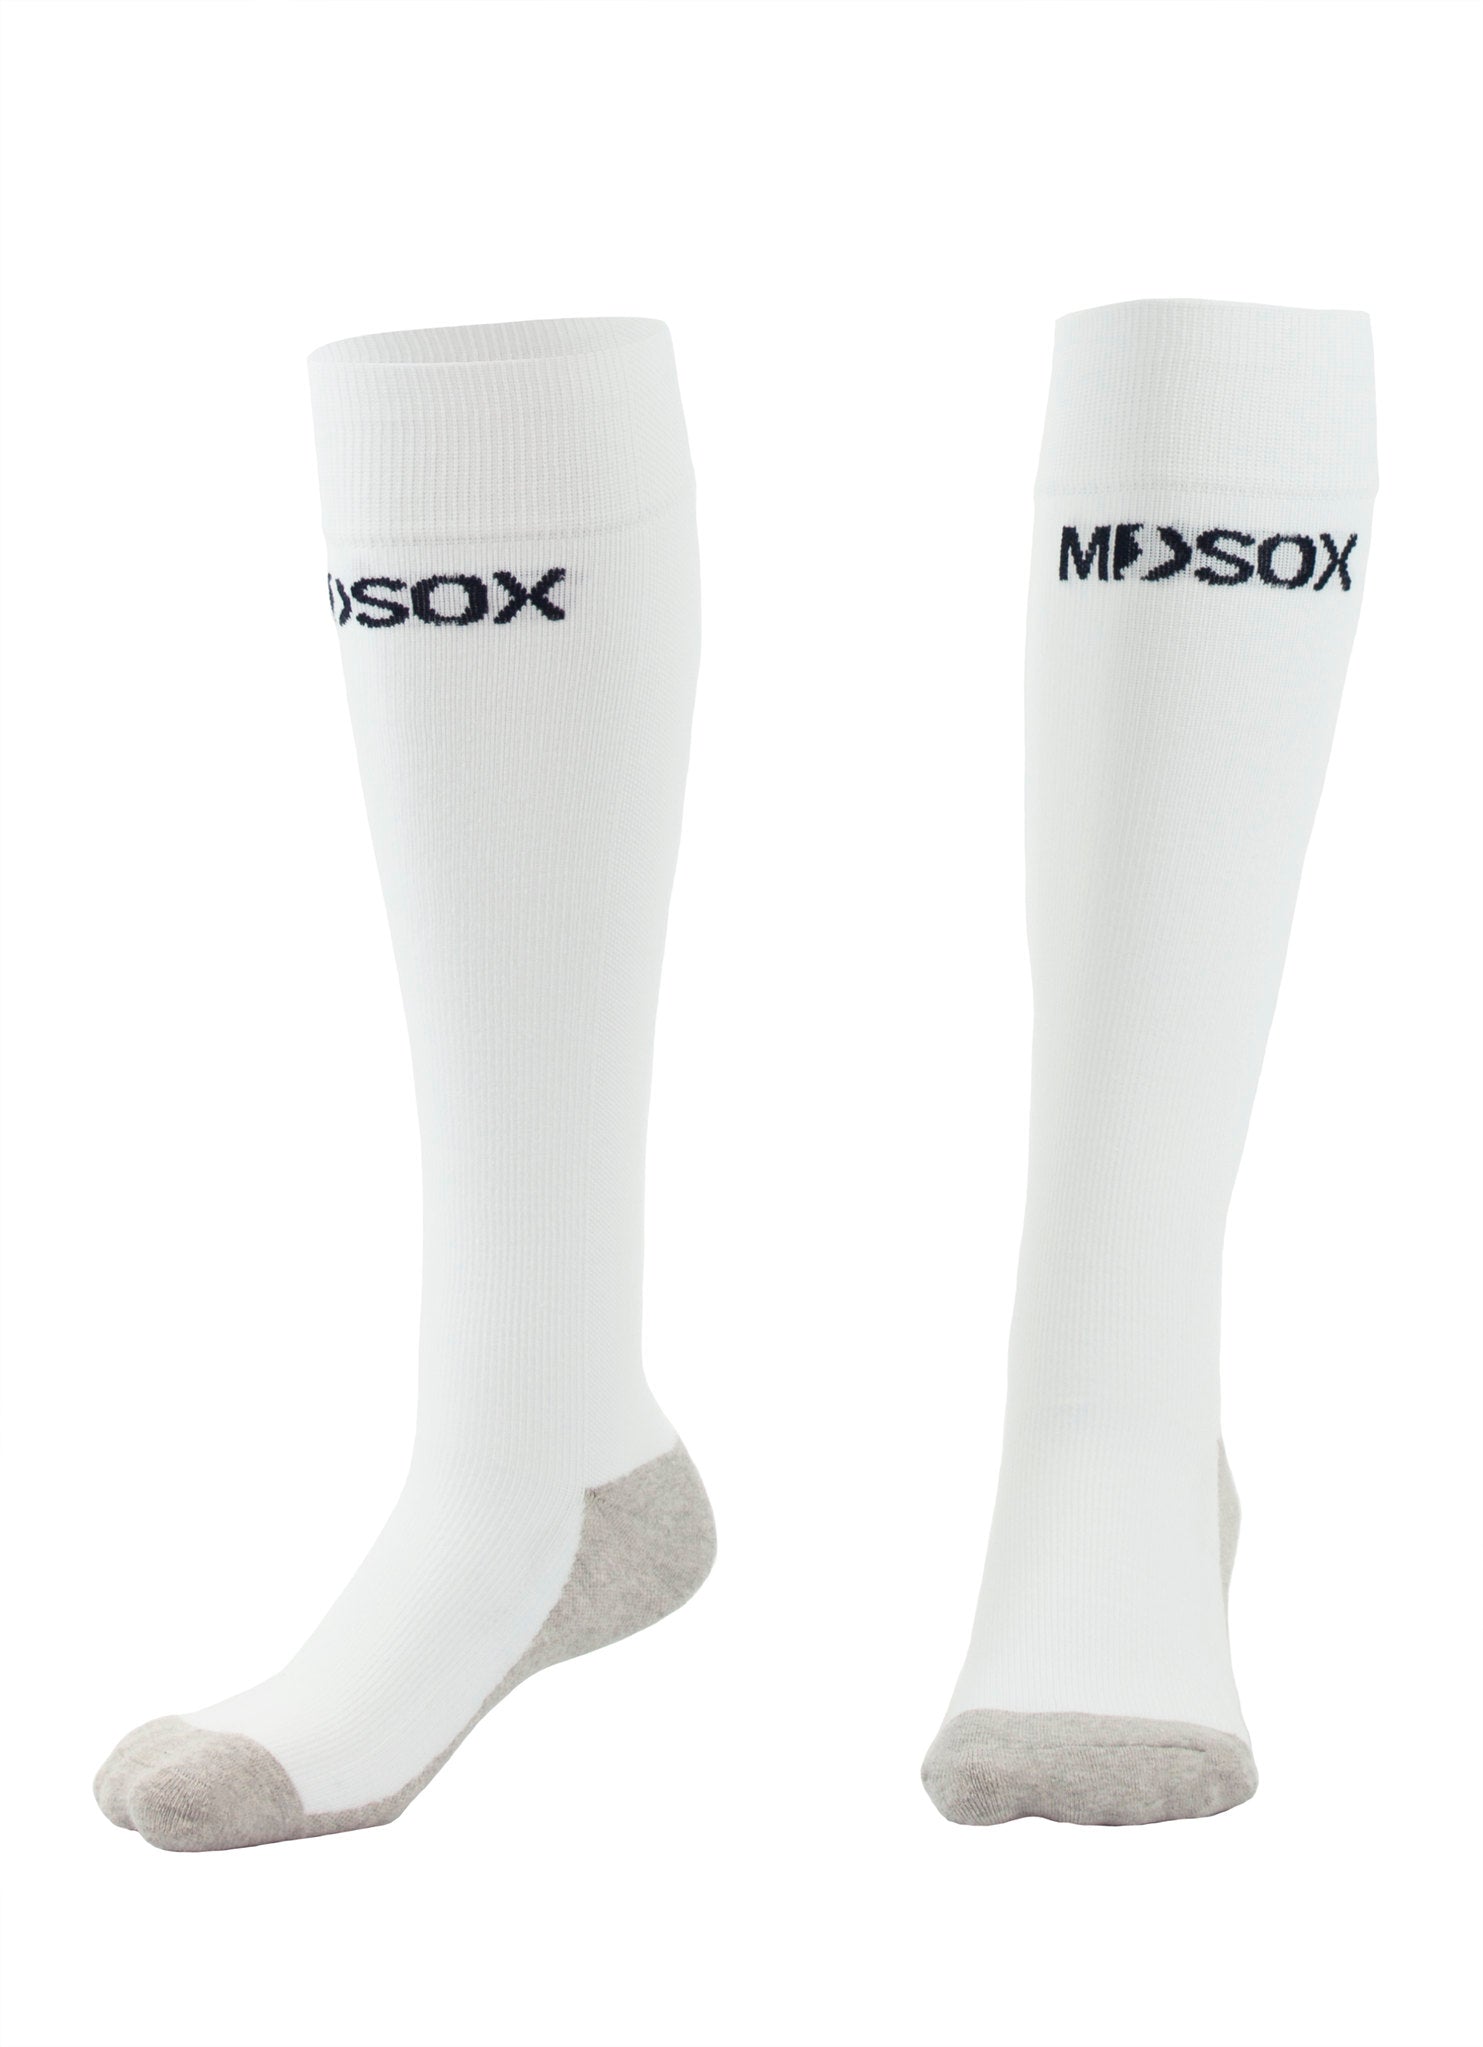 MDSOX 20-30mmHg White